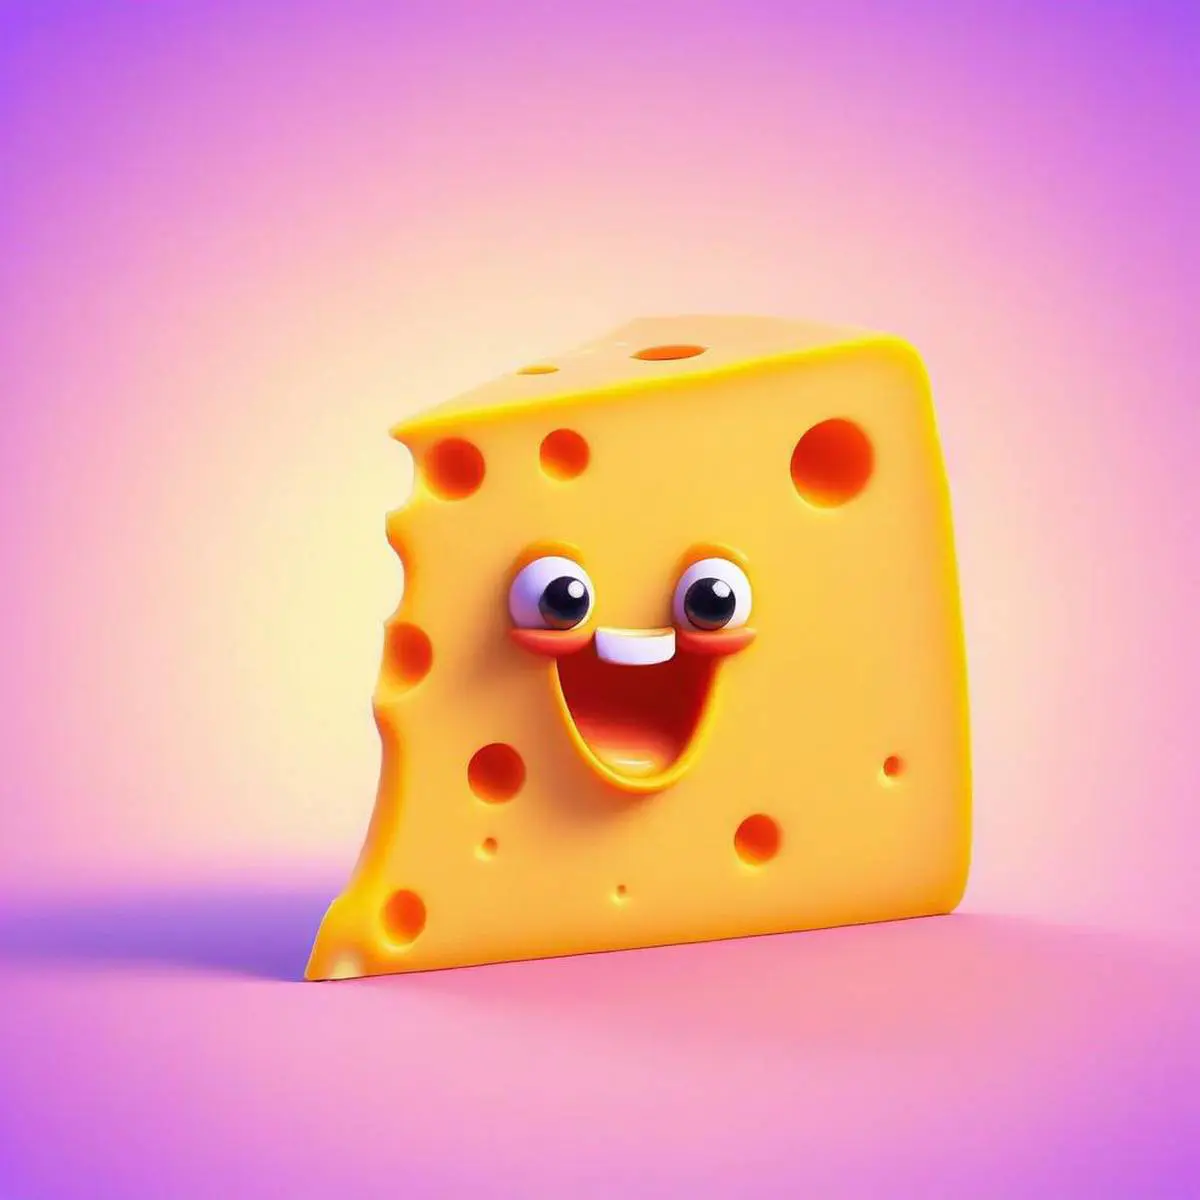 Cheese puns